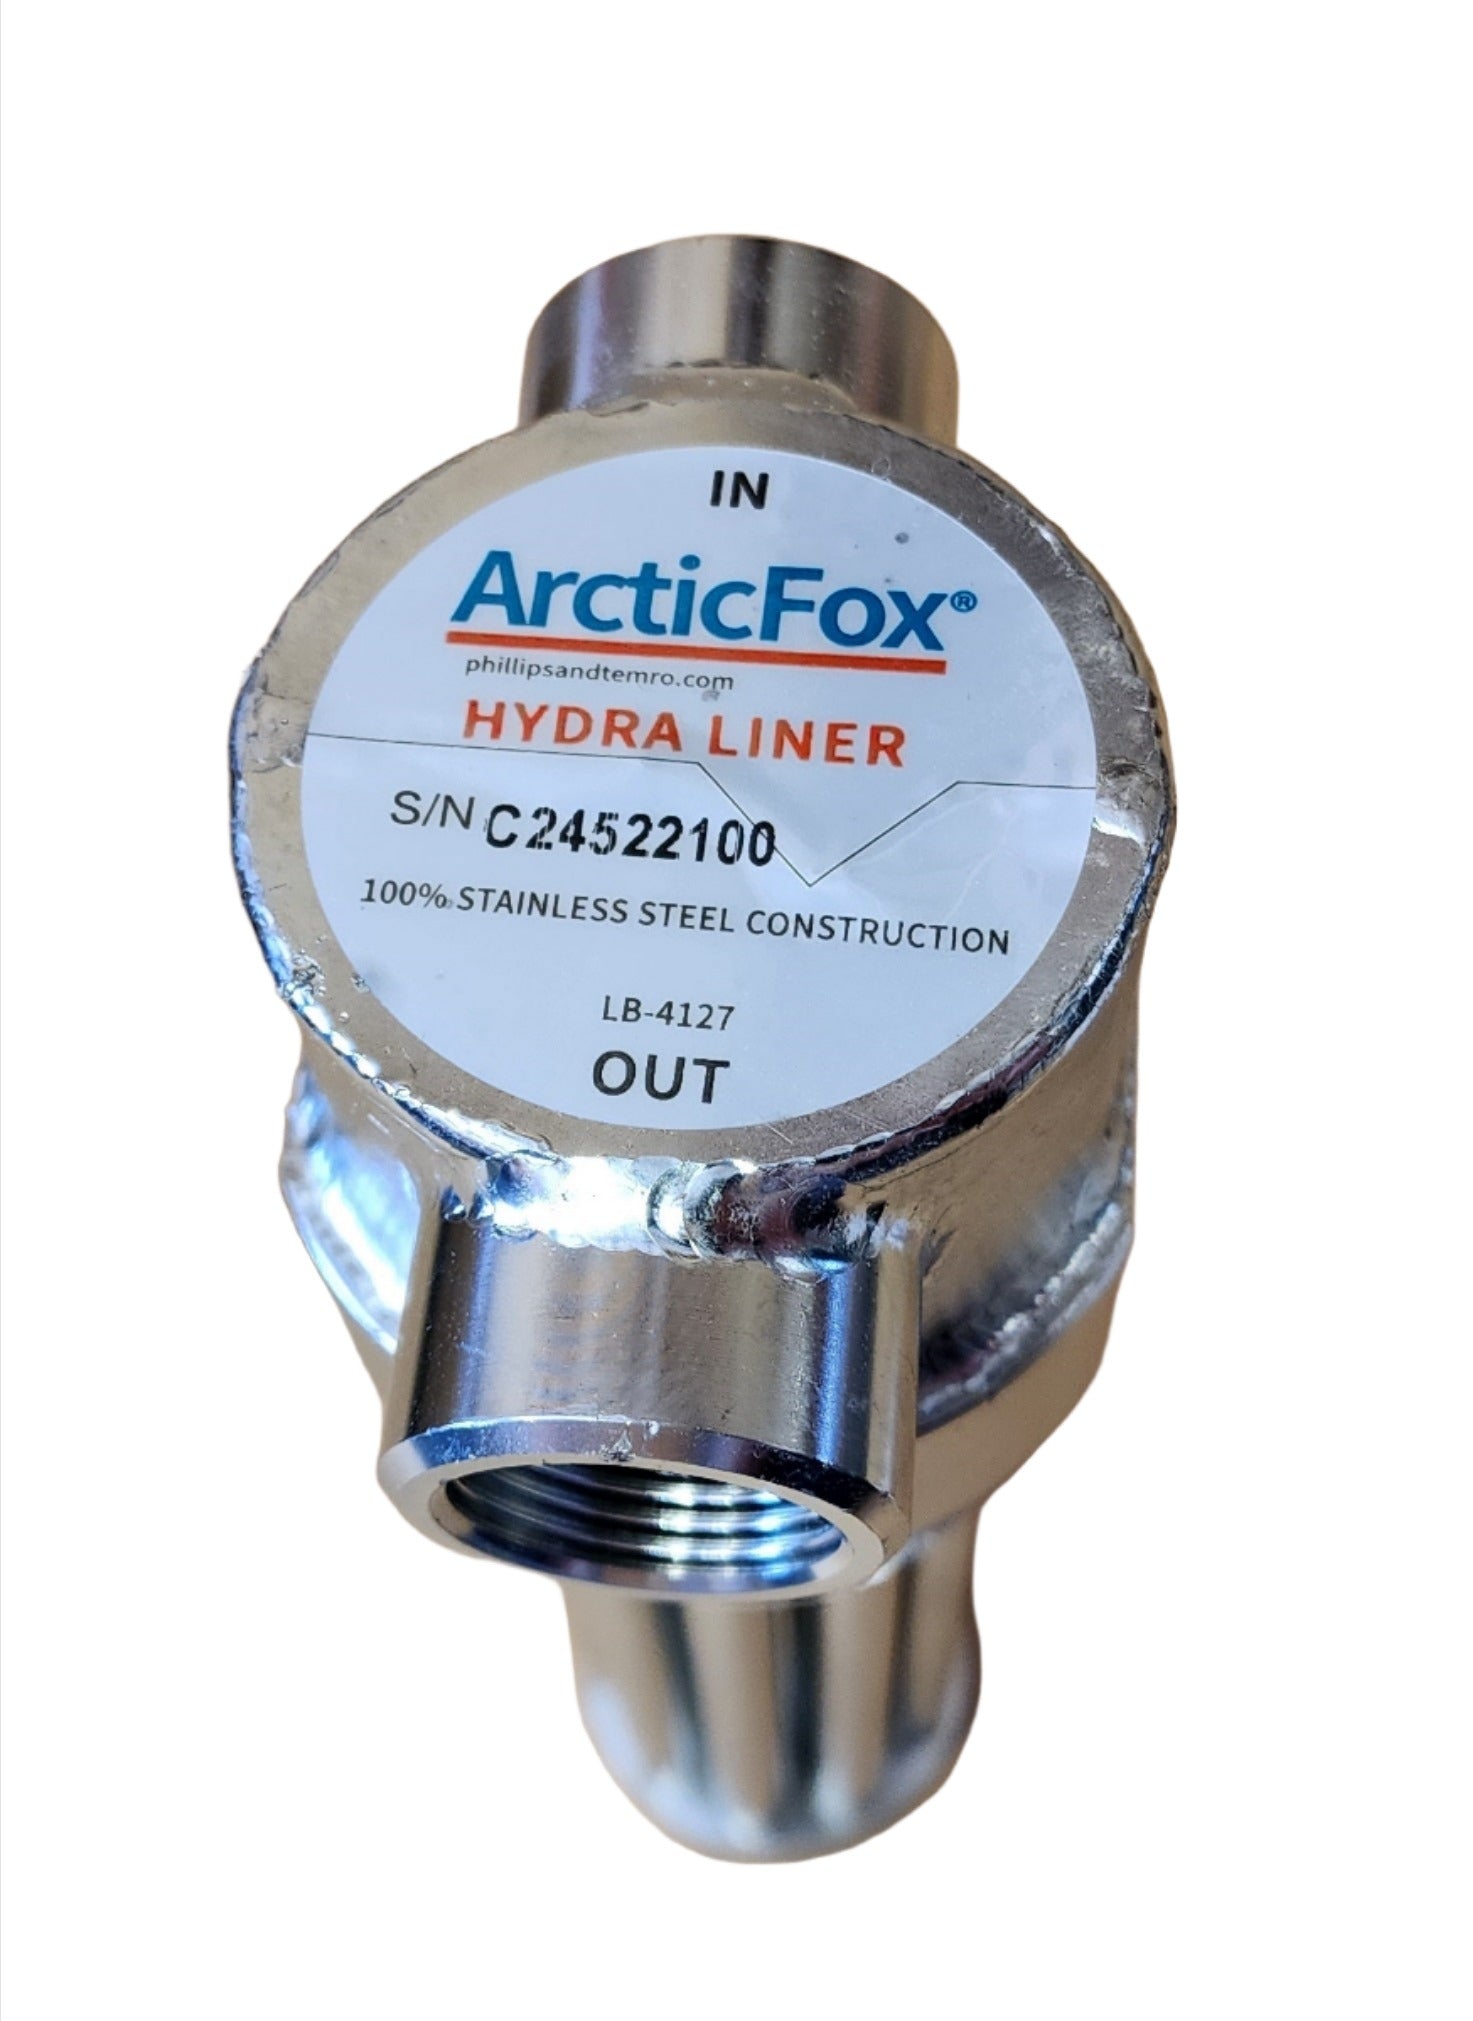 Arctic Fox Hydra Liner In-Tank Fluid Warmer H-4000-24